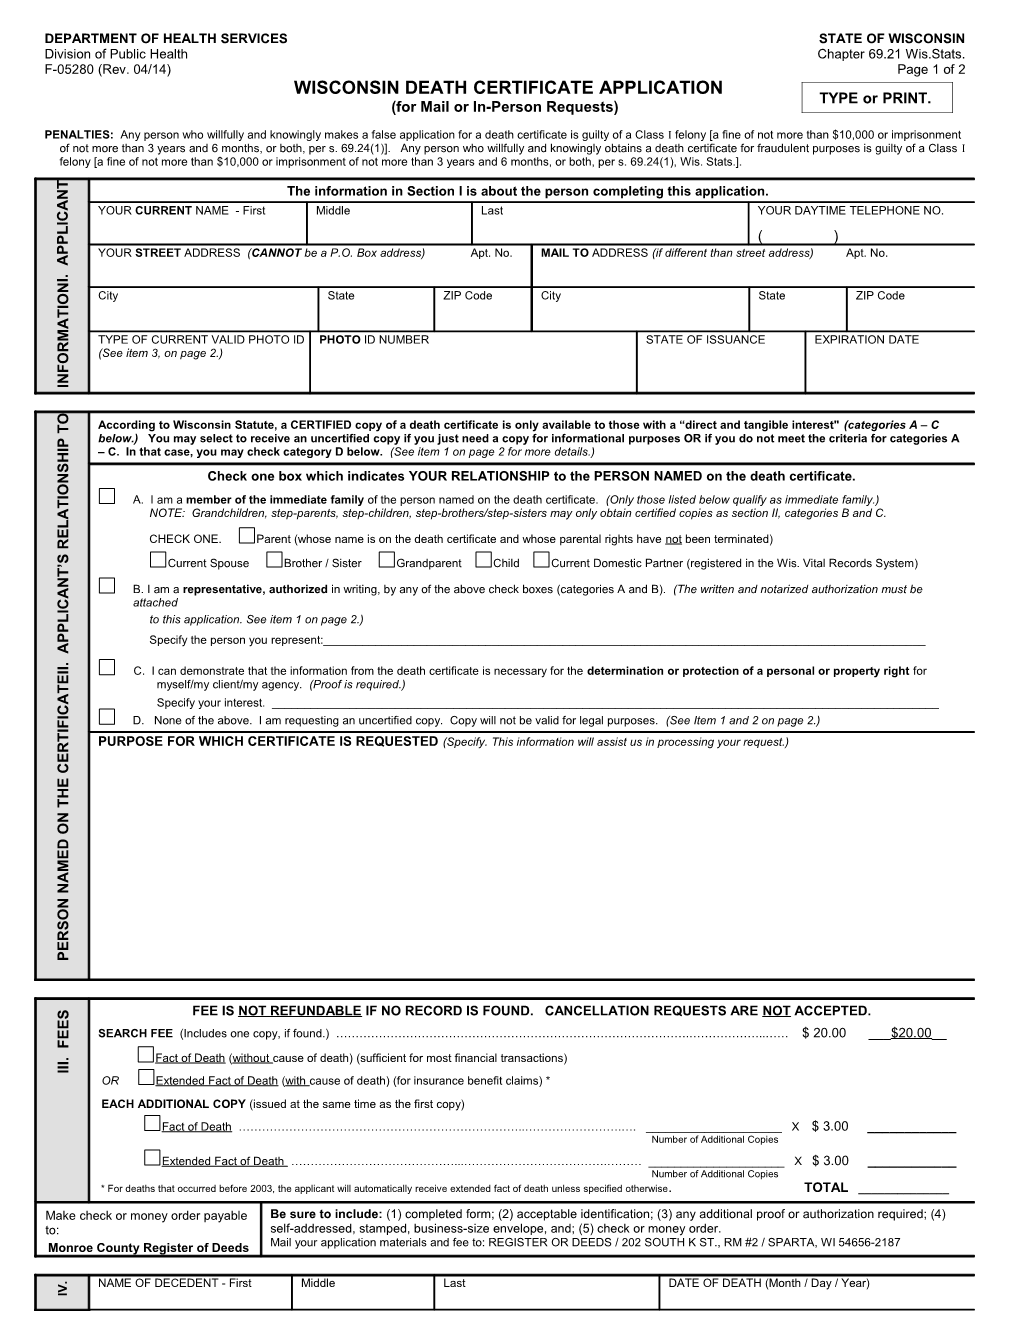 Wisconsin Death Certificate Application